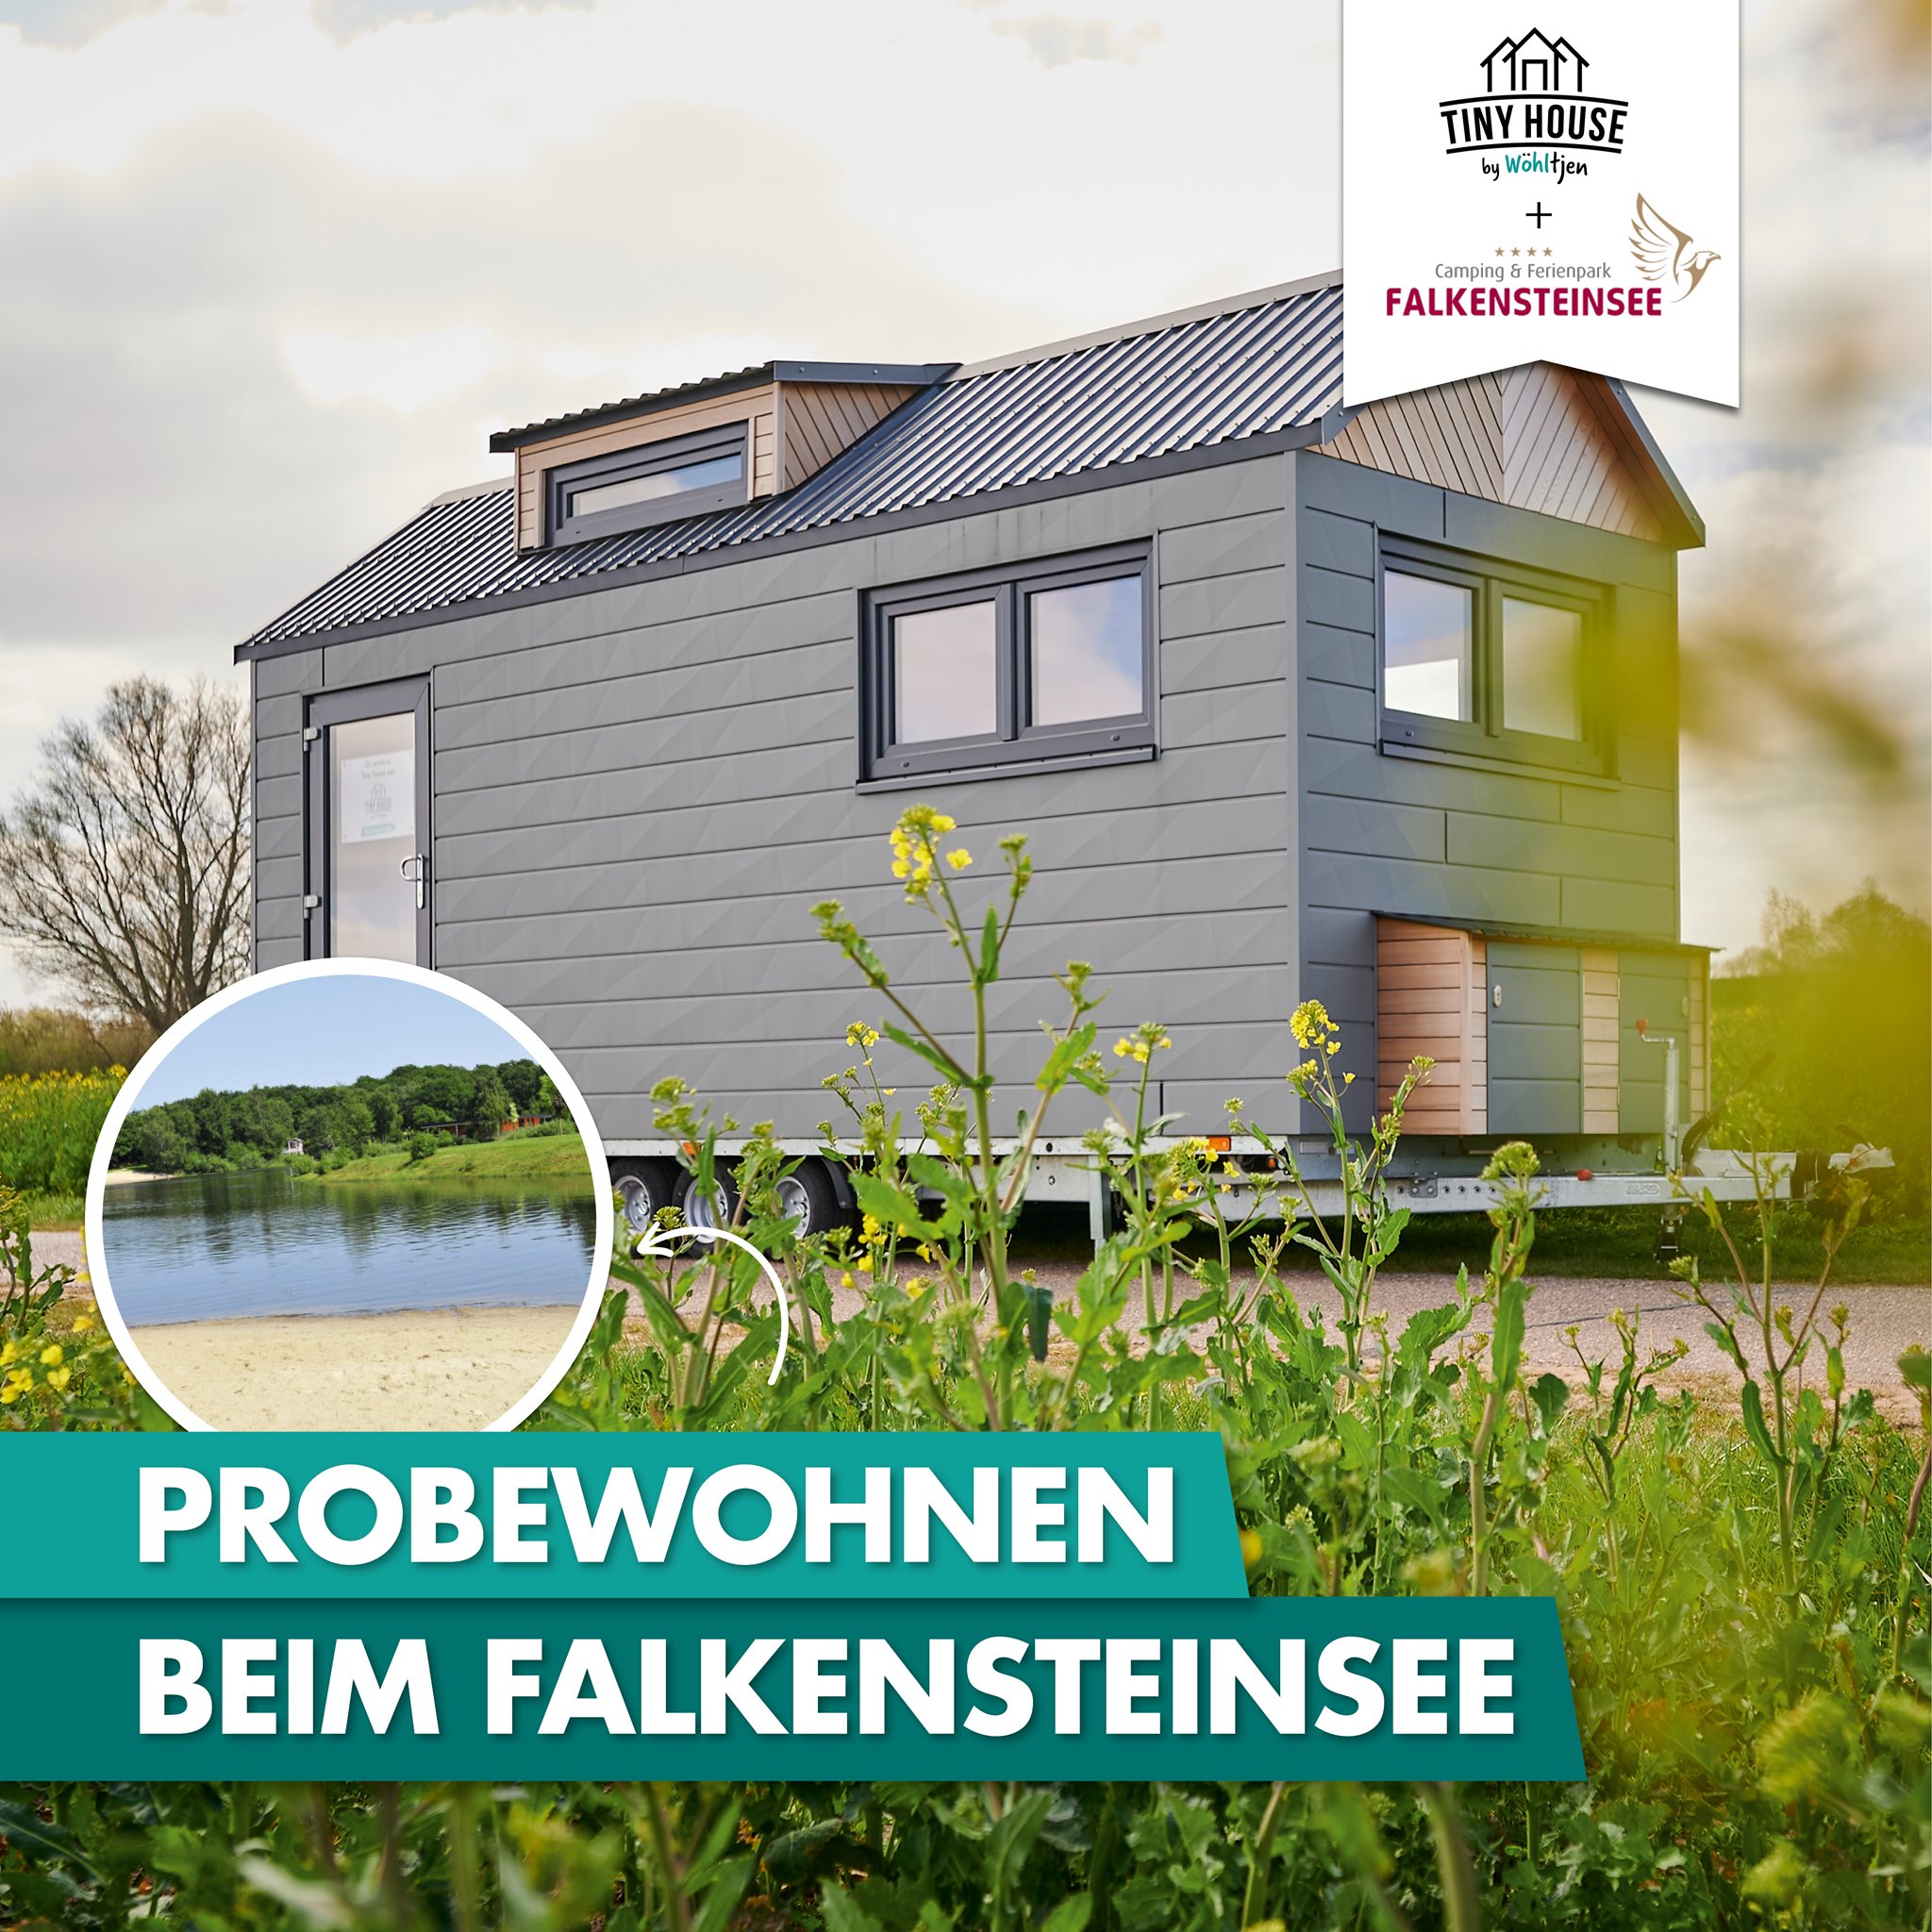 Tiny House kaufen bei Tiny House by Wöhltjen Probewohnen am Falkensteinsee